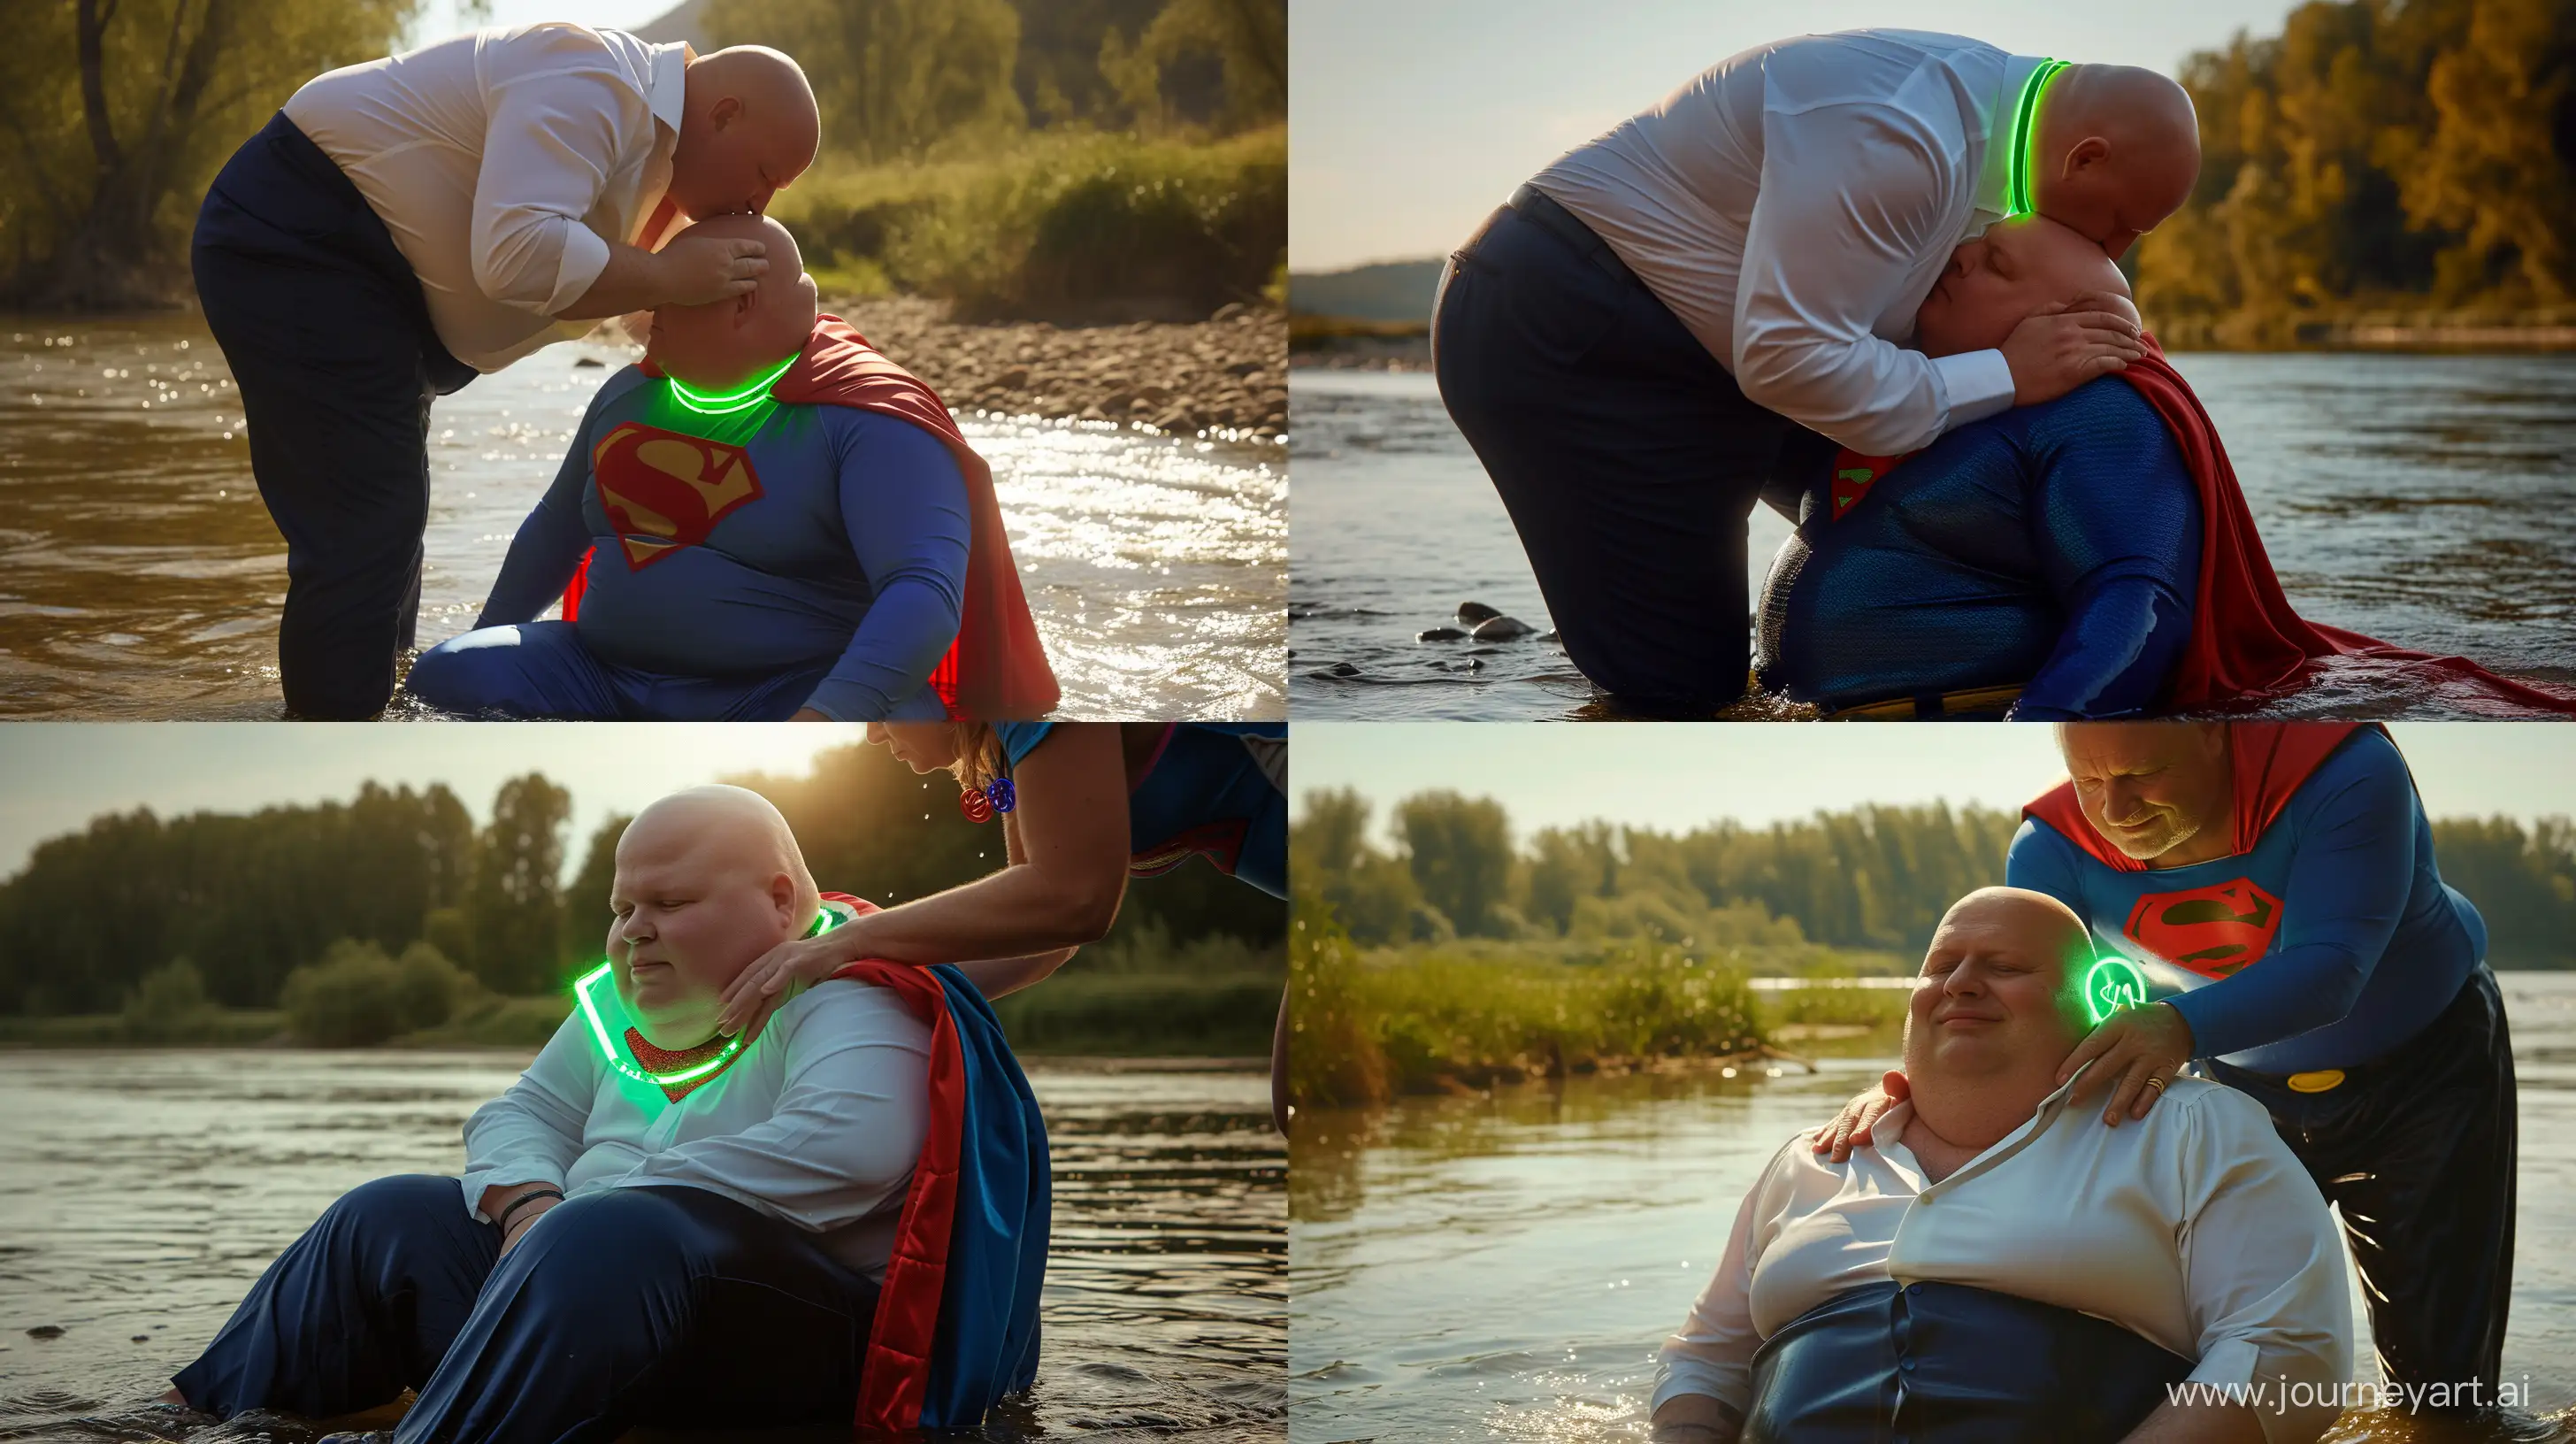 Eccentric-Riverfront-Scene-Playful-Superhero-Moment-with-Neon-Collar